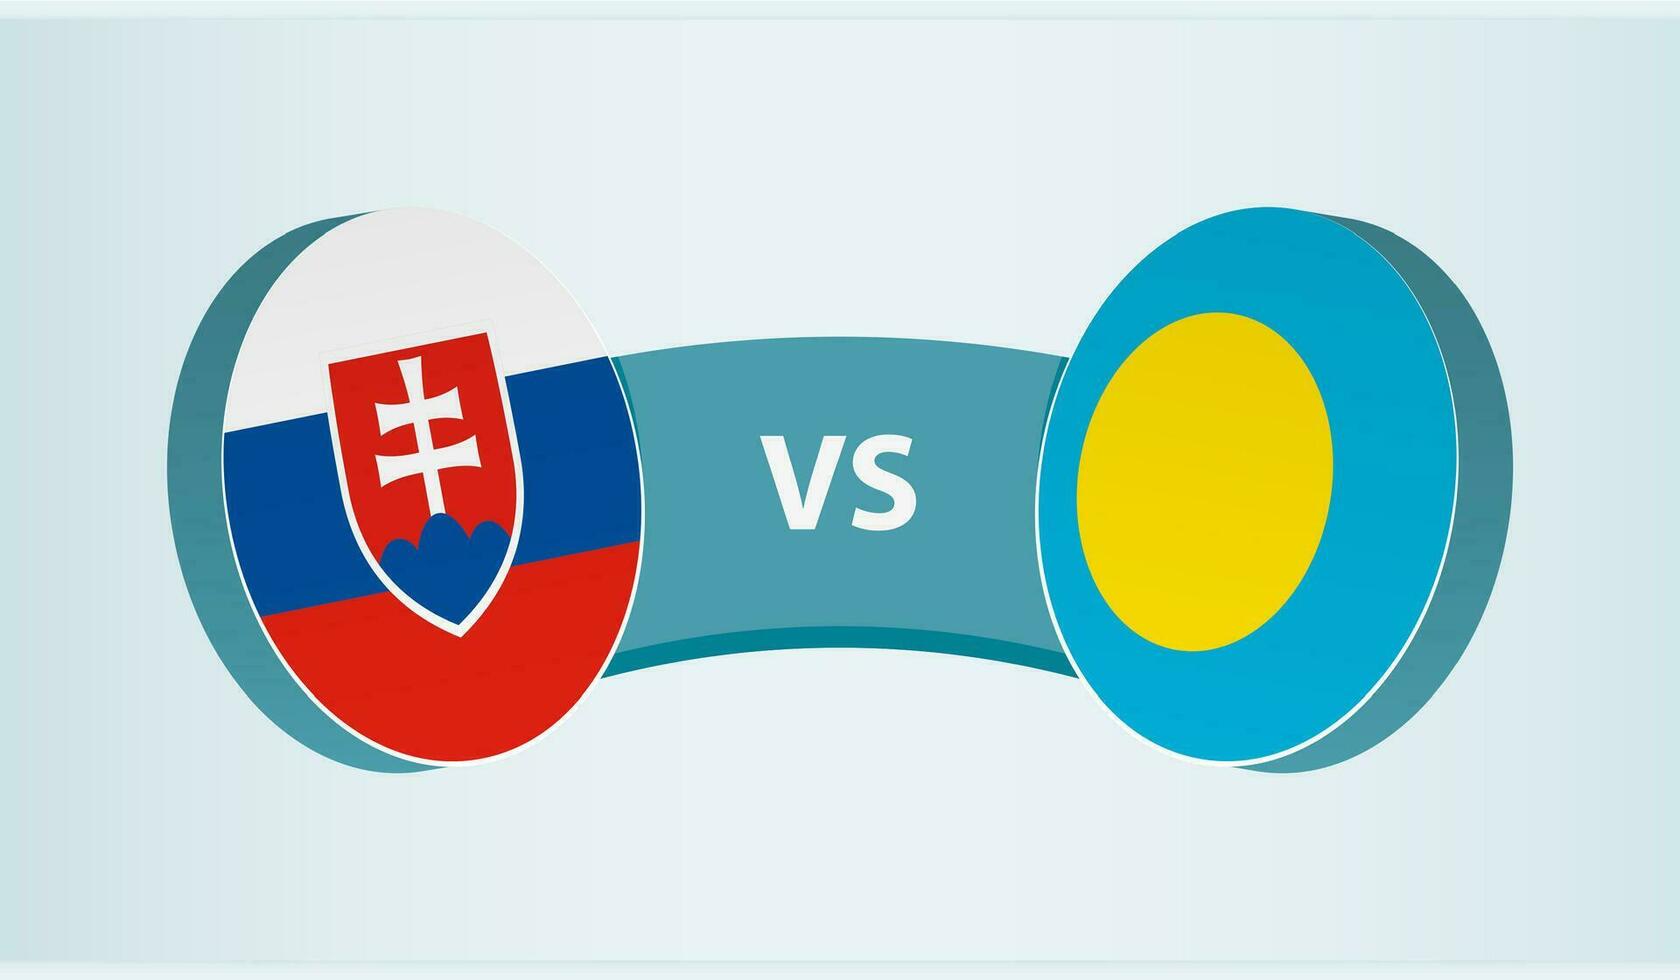 Slovakia versus Palau, team sports competition concept. vector